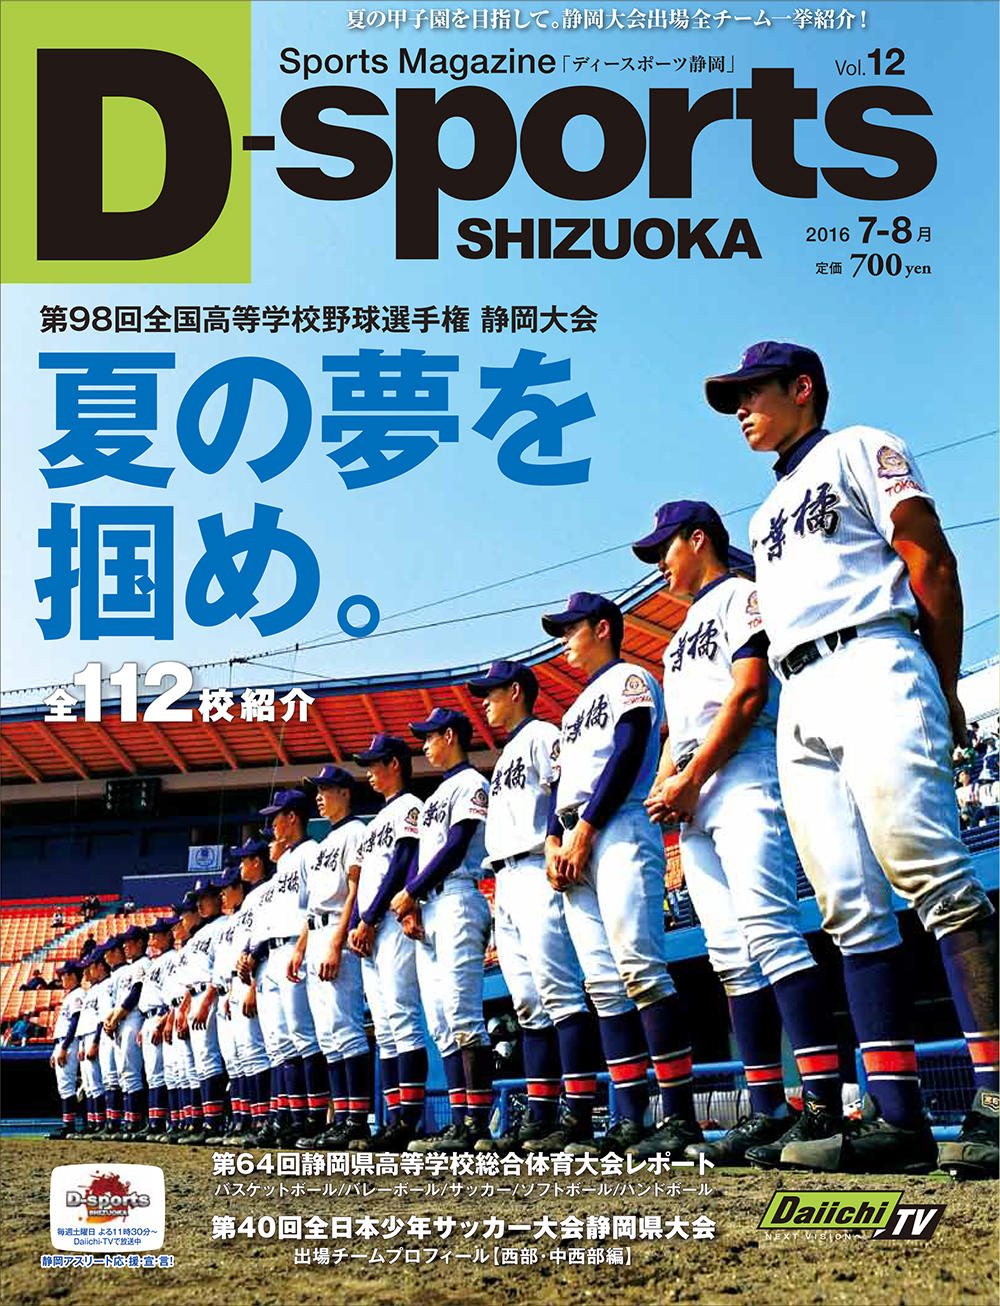 http://d-sports.shizuokastandard.jp/article/2016/dsp_h1.jpg